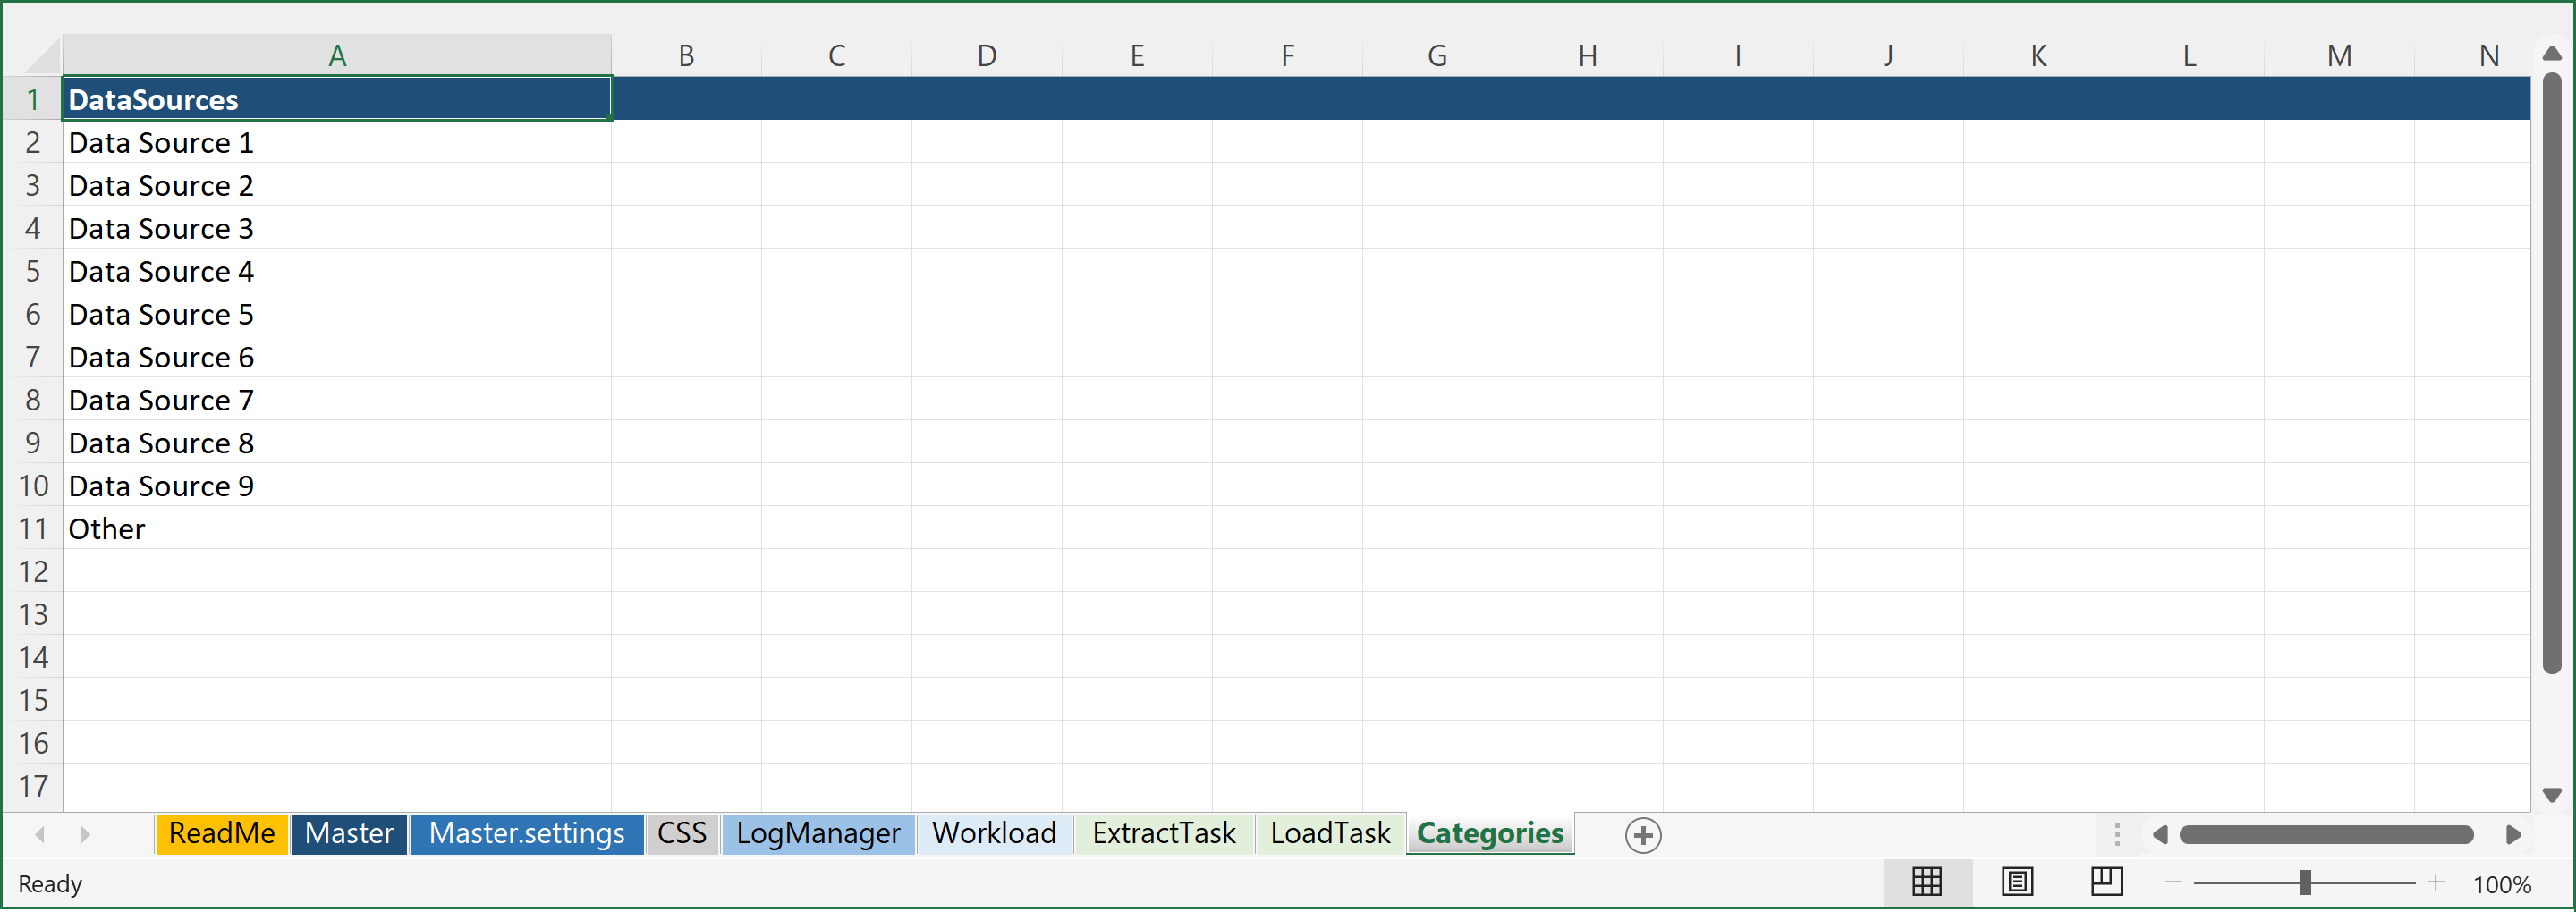 !Composable DataPortals ETL Workloads Categories Sheet